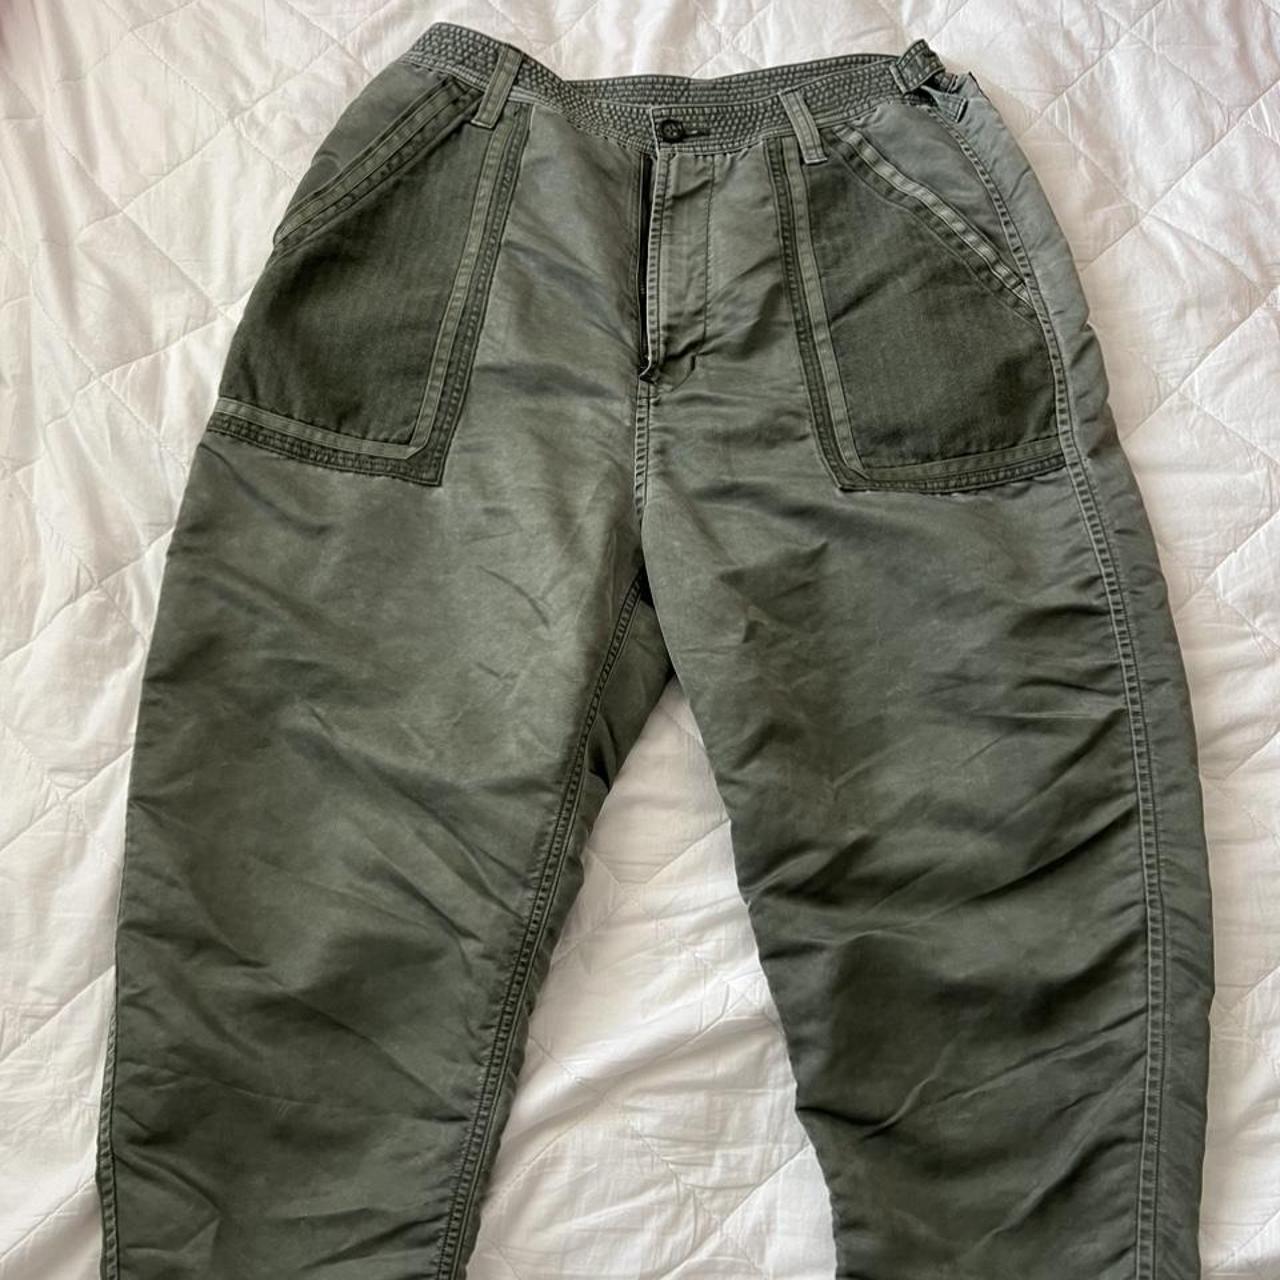 Porter Yoshida Classic Military Pants Fit high... - Depop